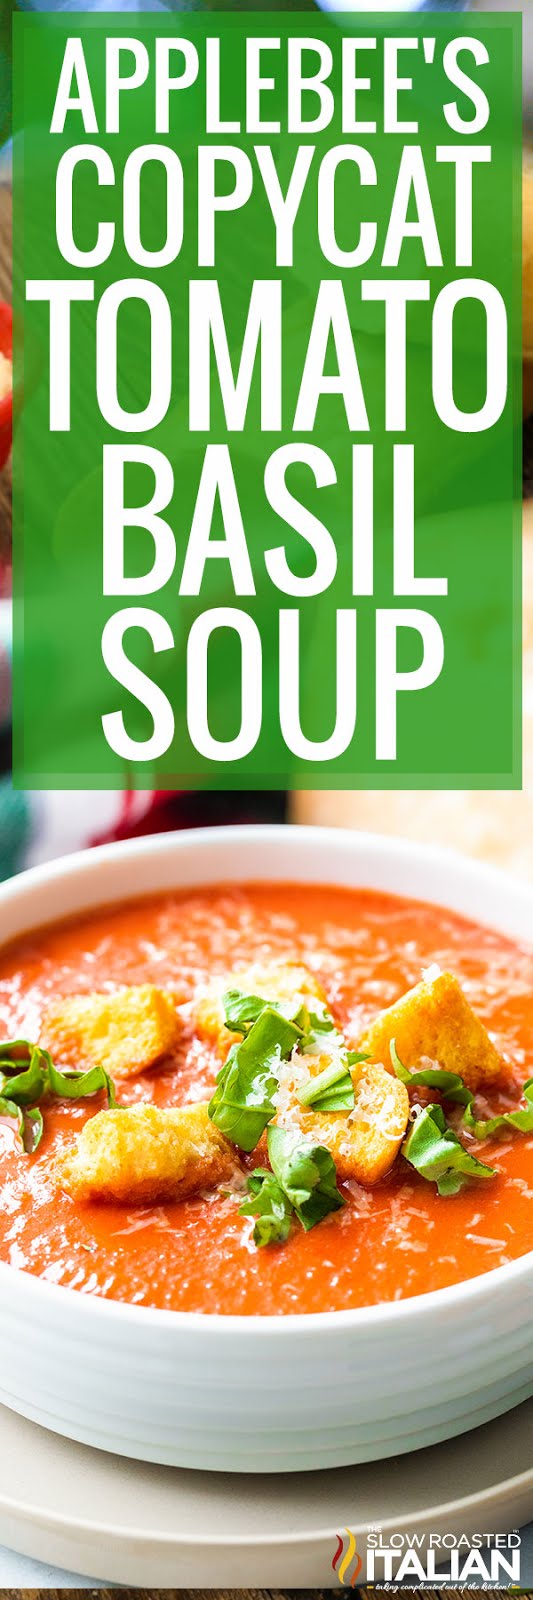 Tomato Basil Soup Recipe (Applebee's Copycat) + Video